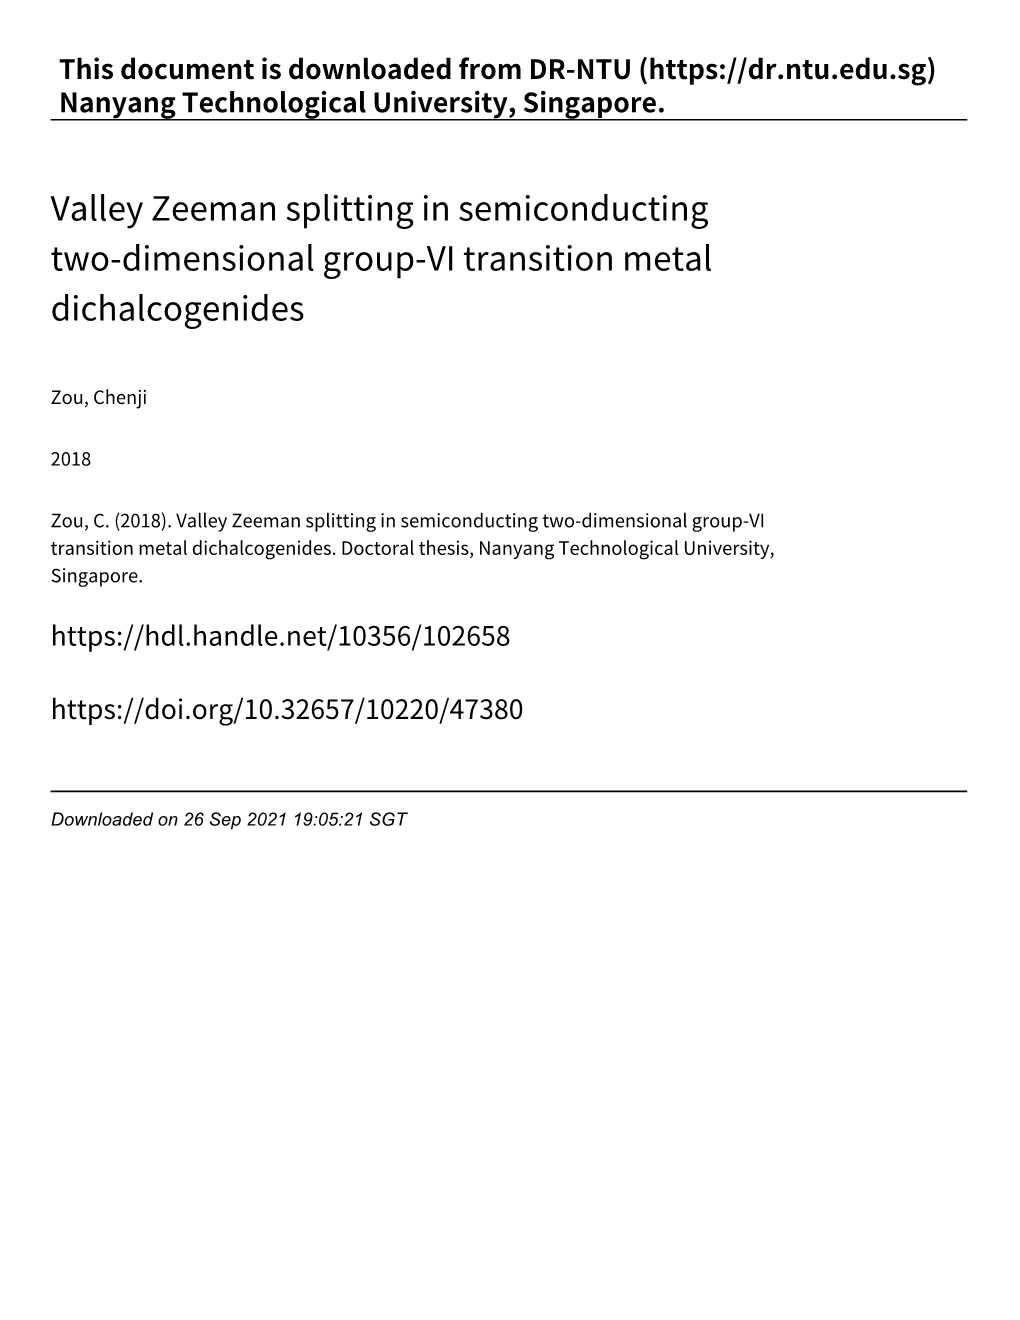 Valley Zeeman Splitting in Semiconducting Two‑Dimensional Group‑VI Transition Metal Dichalcogenides